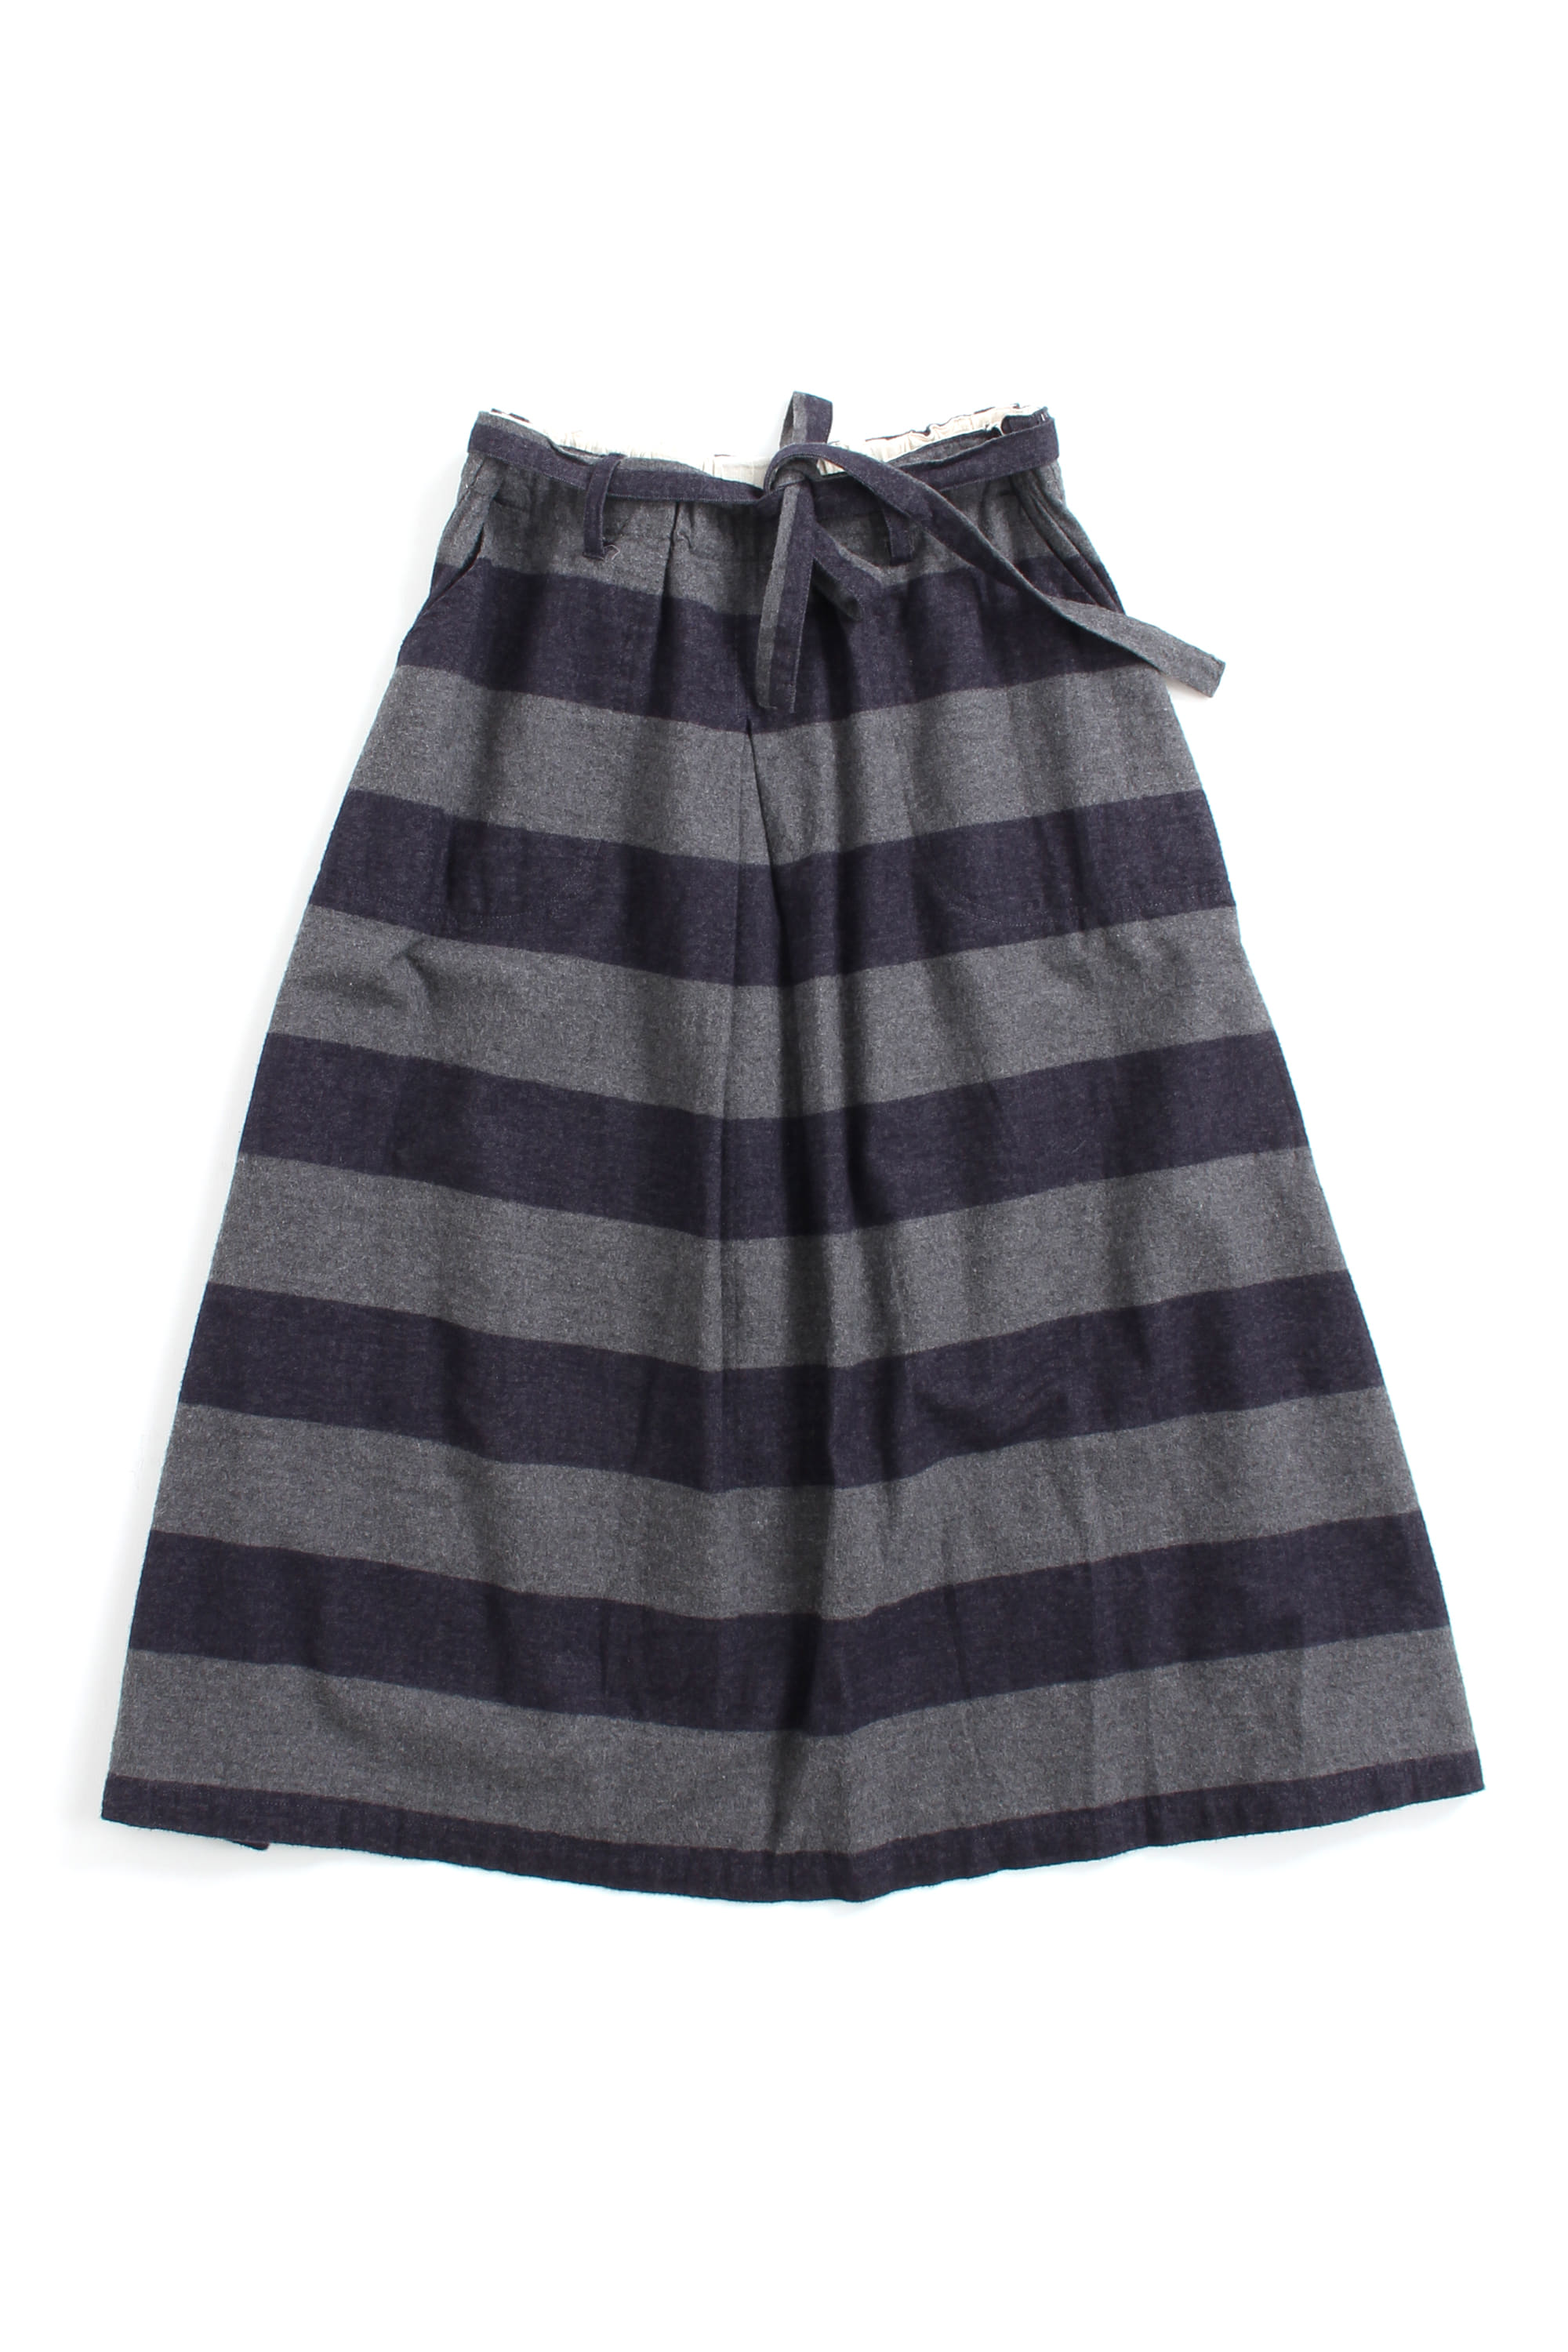 SM2 Stripe Skirts(FREE)